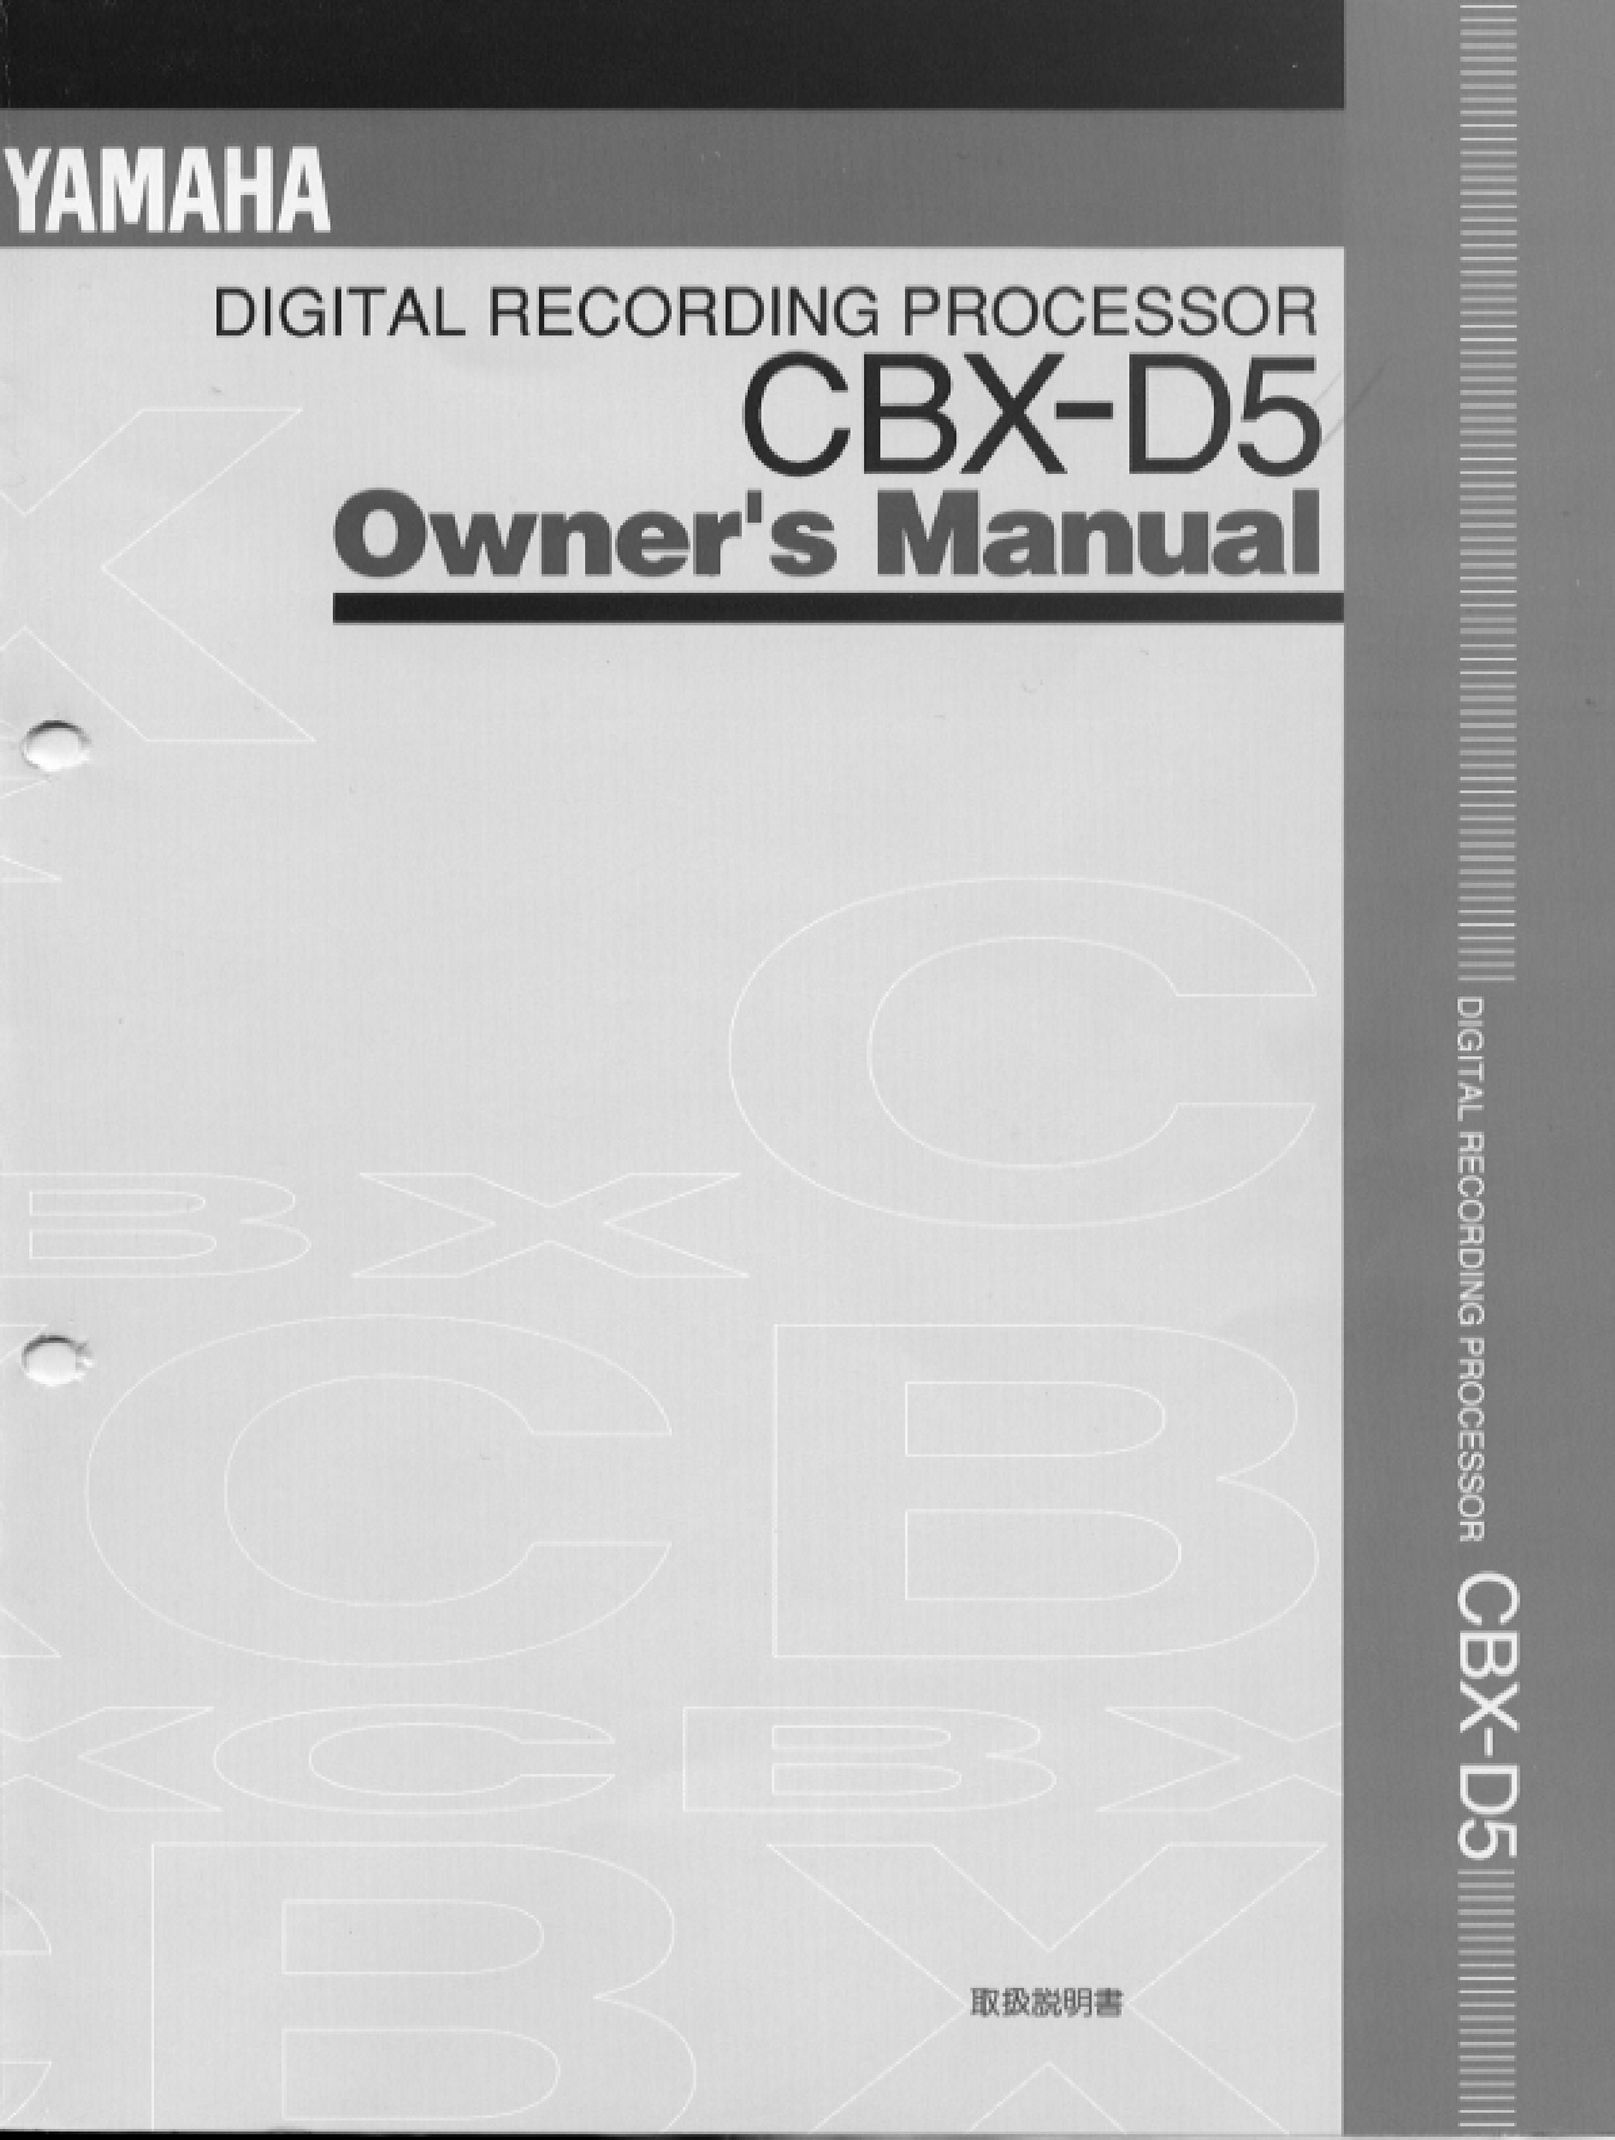 Yamaha CBX-D5 DVR User Manual